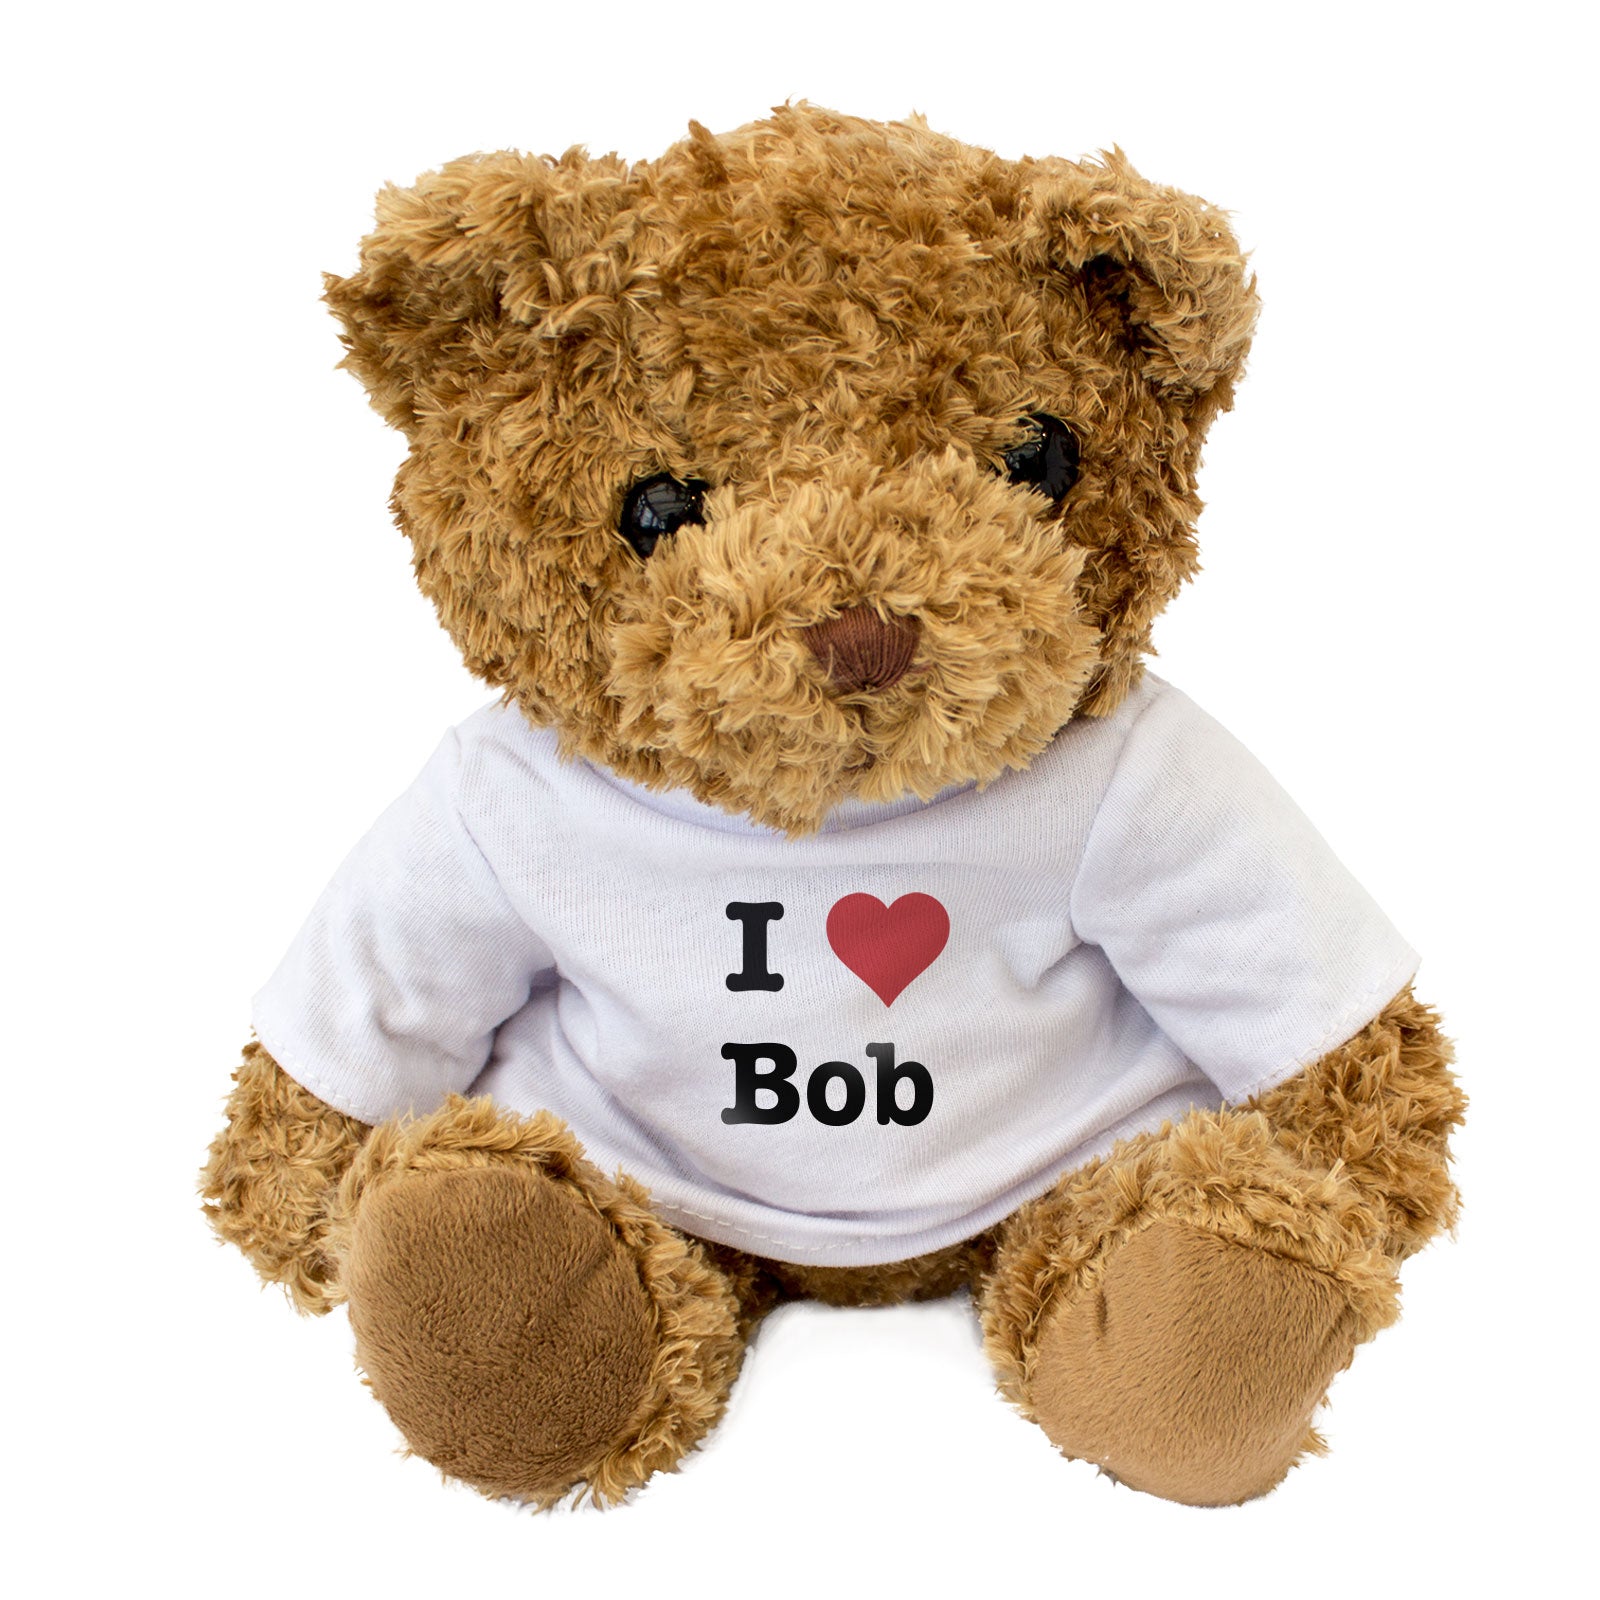 I Love Bob - Teddy Bear